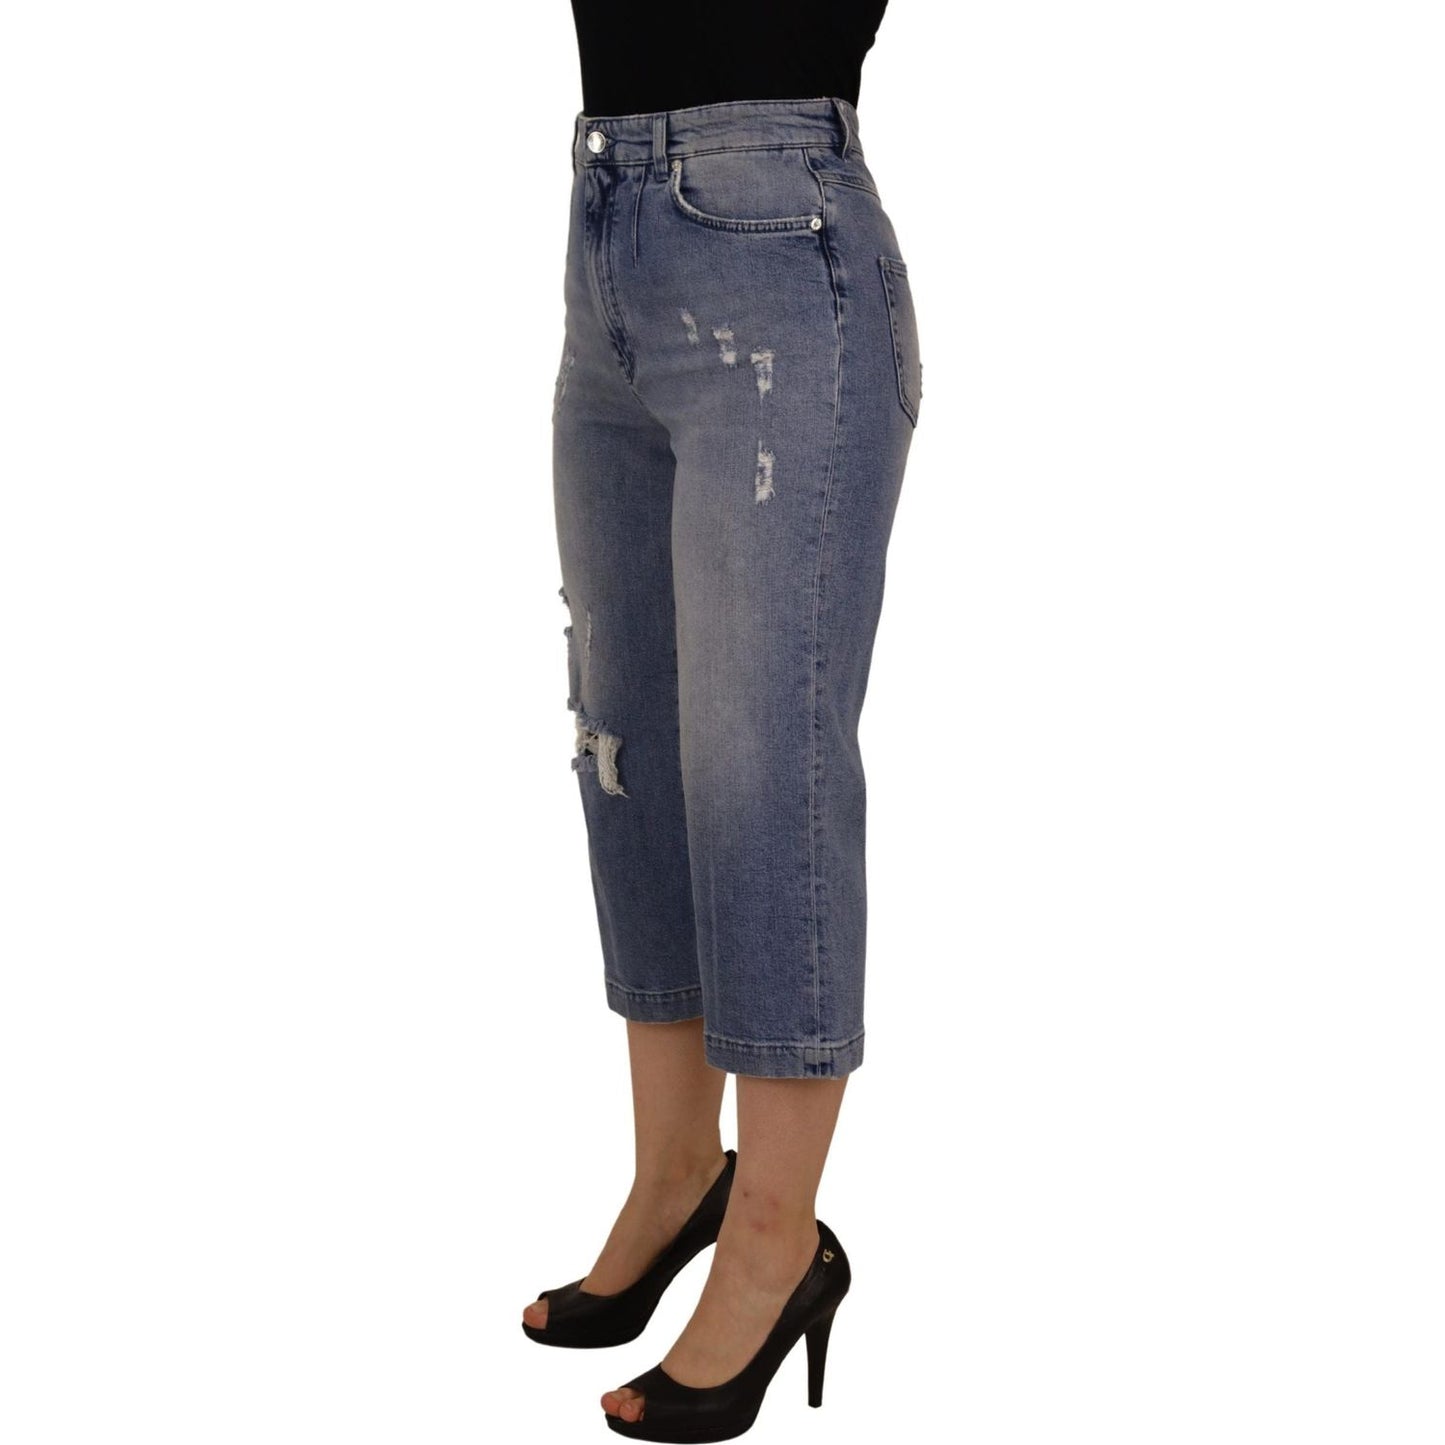 Dolce & GabbanaHigh Waist Skinny Denim Jeans - BlueMcRichard Designer Brands£399.00